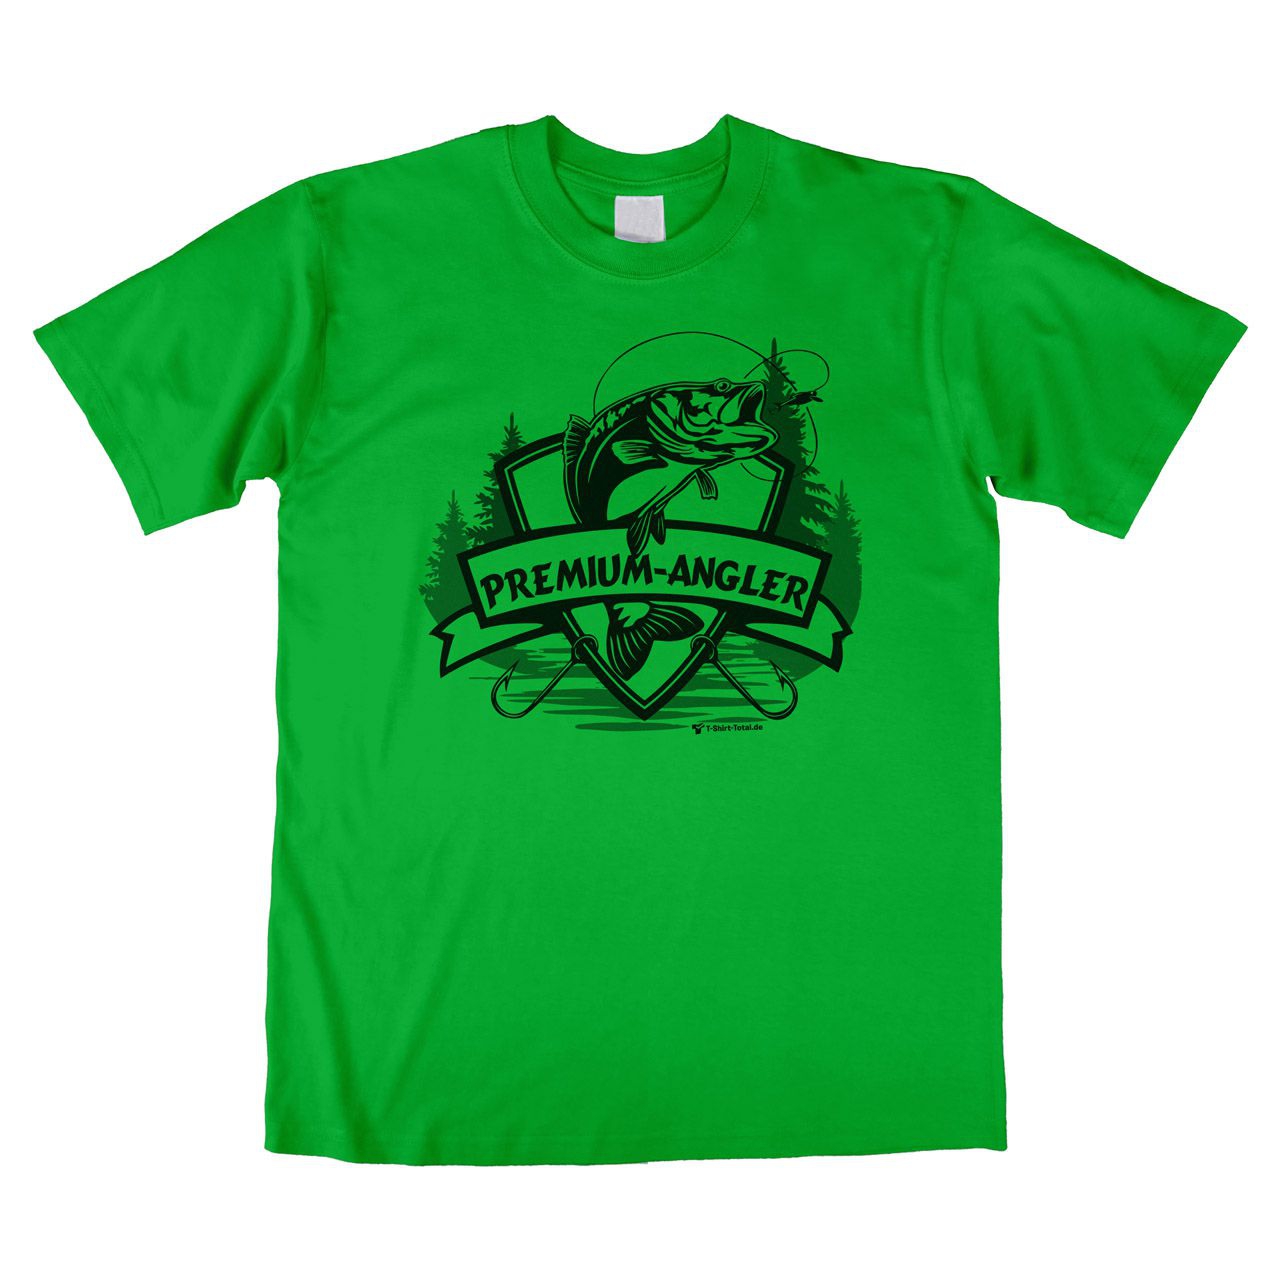 Premium-Angler Unisex T-Shirt grün Extra Large